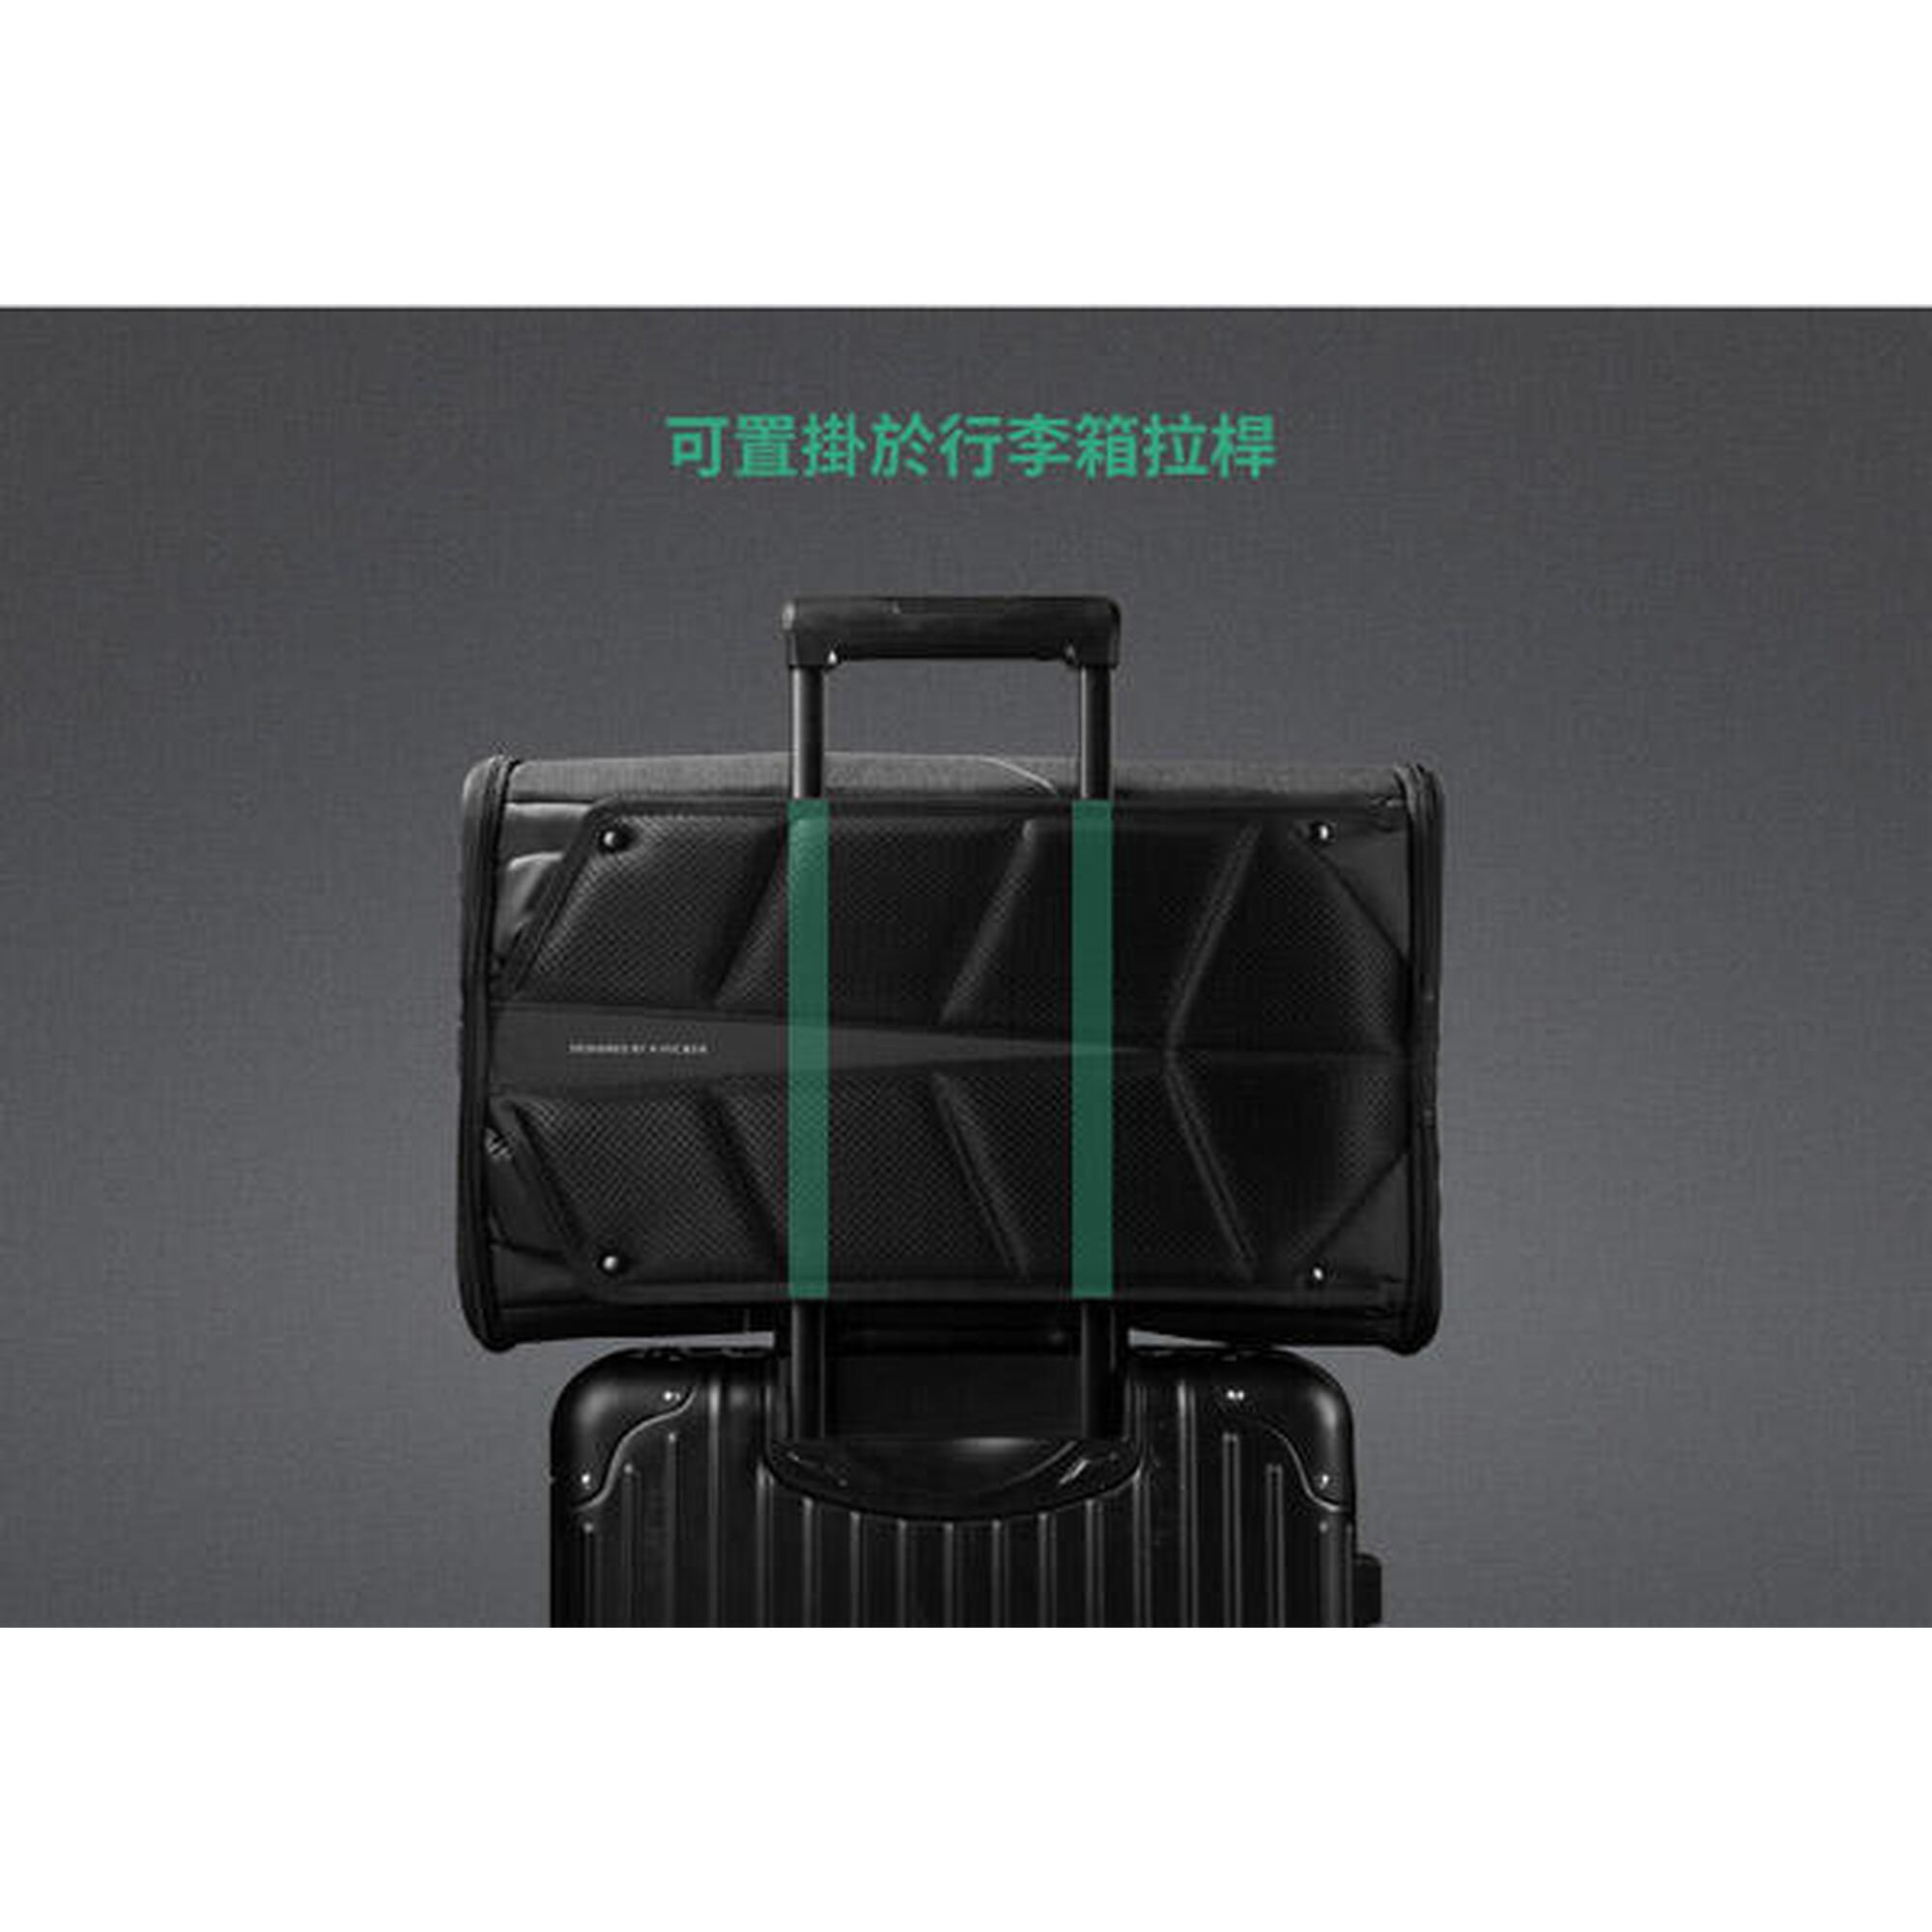 Kincase Ultra Anti-cut Travel Backpack 25L - Black